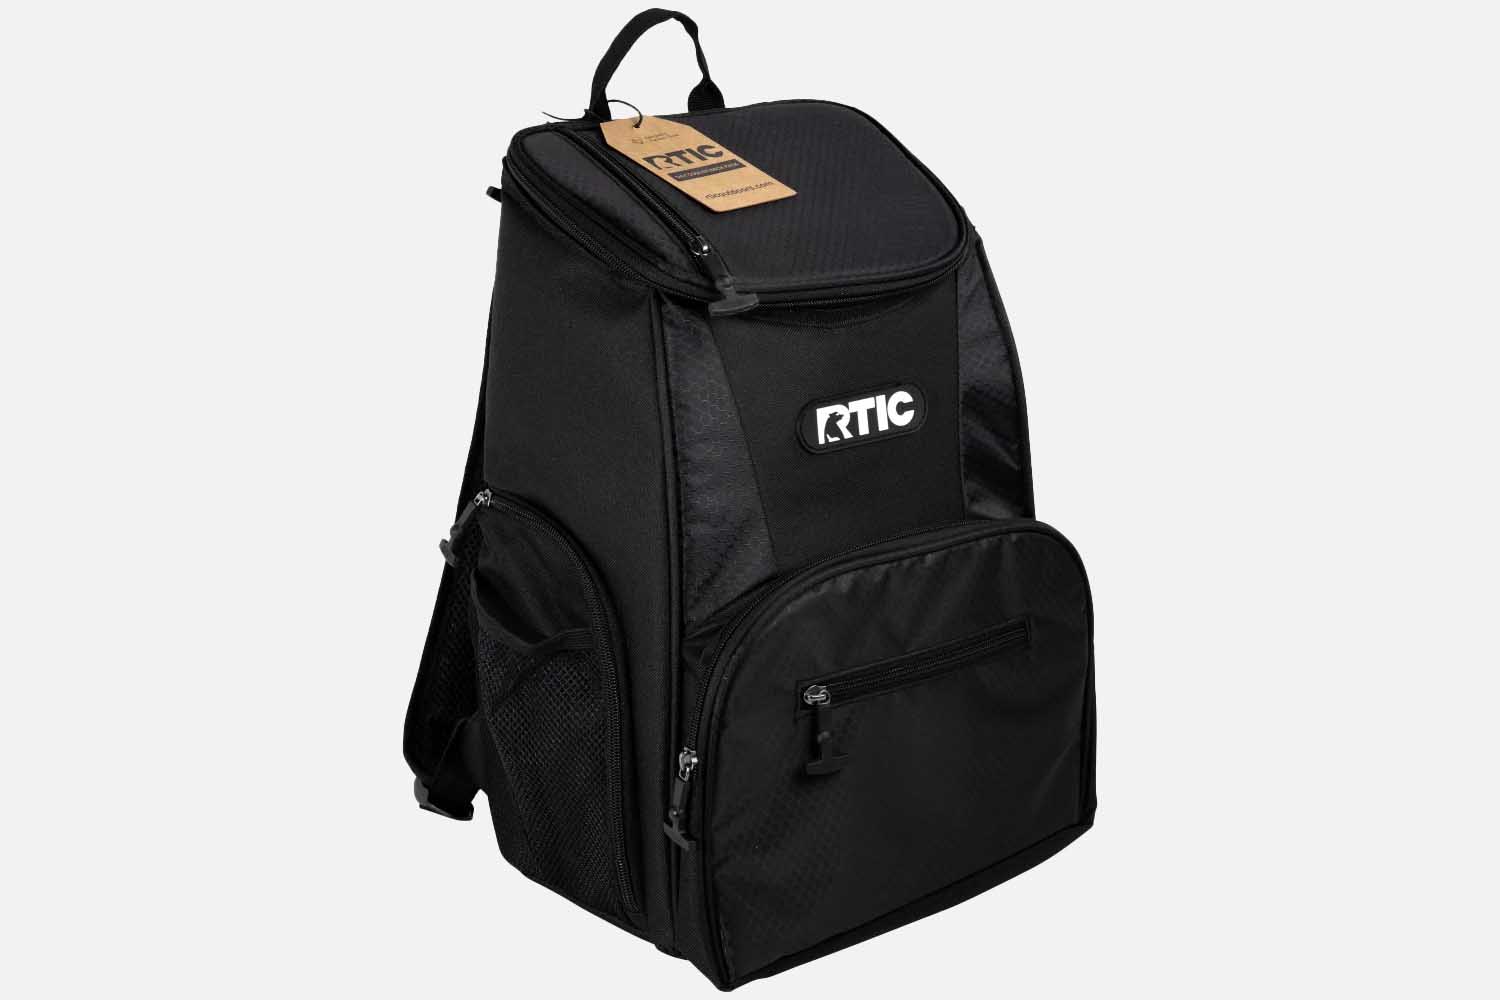 RTIC Lightweight Backpack Cooler